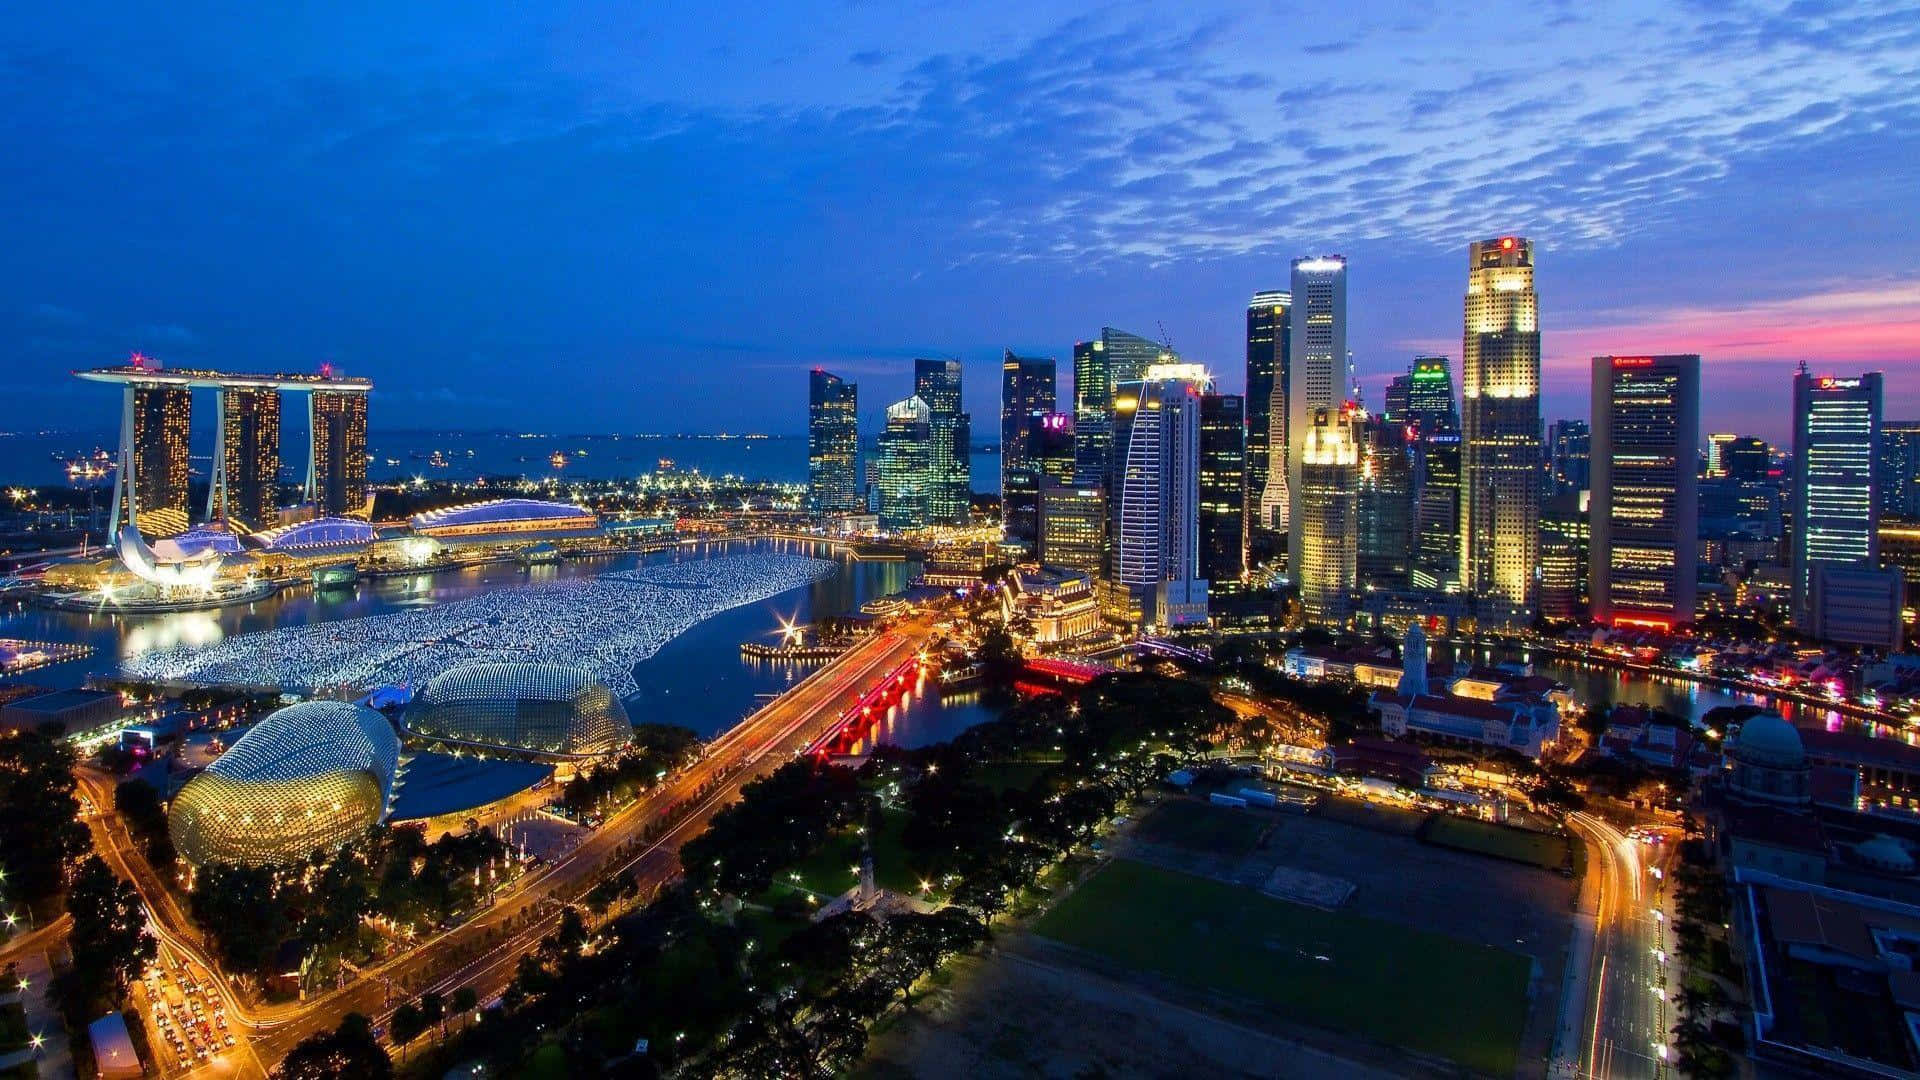 The Skyline Of Singapore At Night